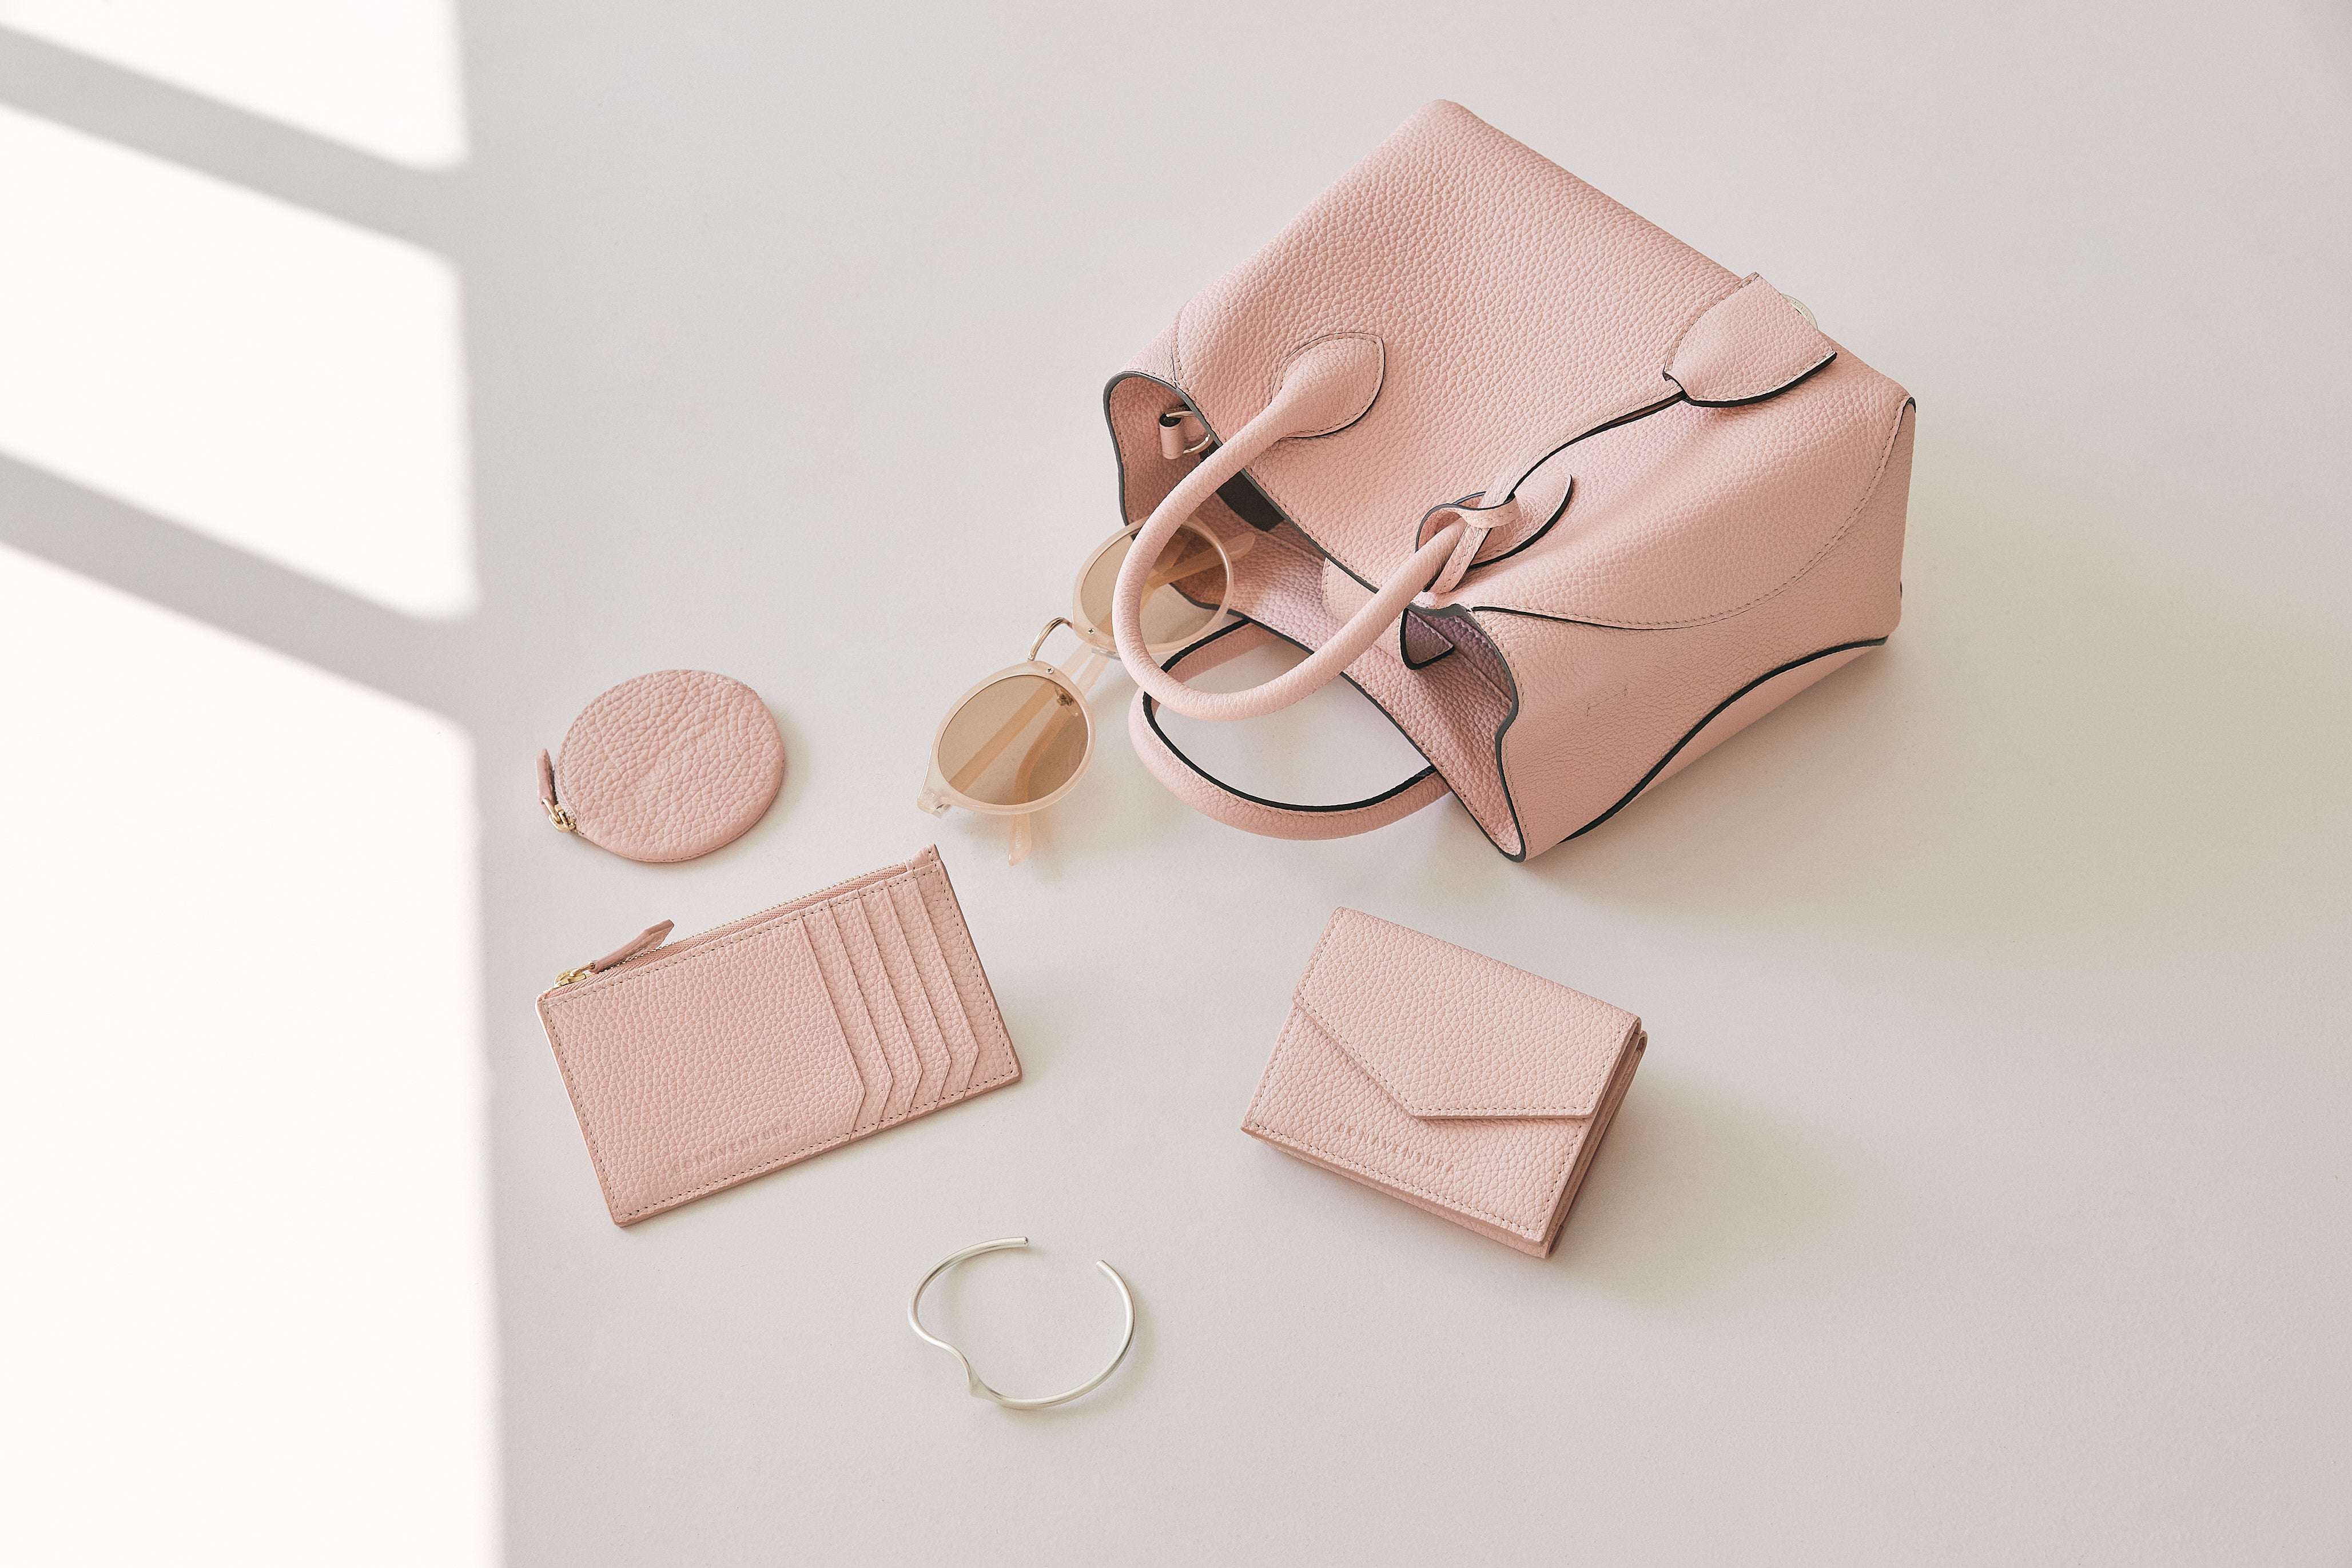 An elegant BONAVENTURA wallet, stylishly arranged next to trendy fashion accessories and a luxurious leather handbag.